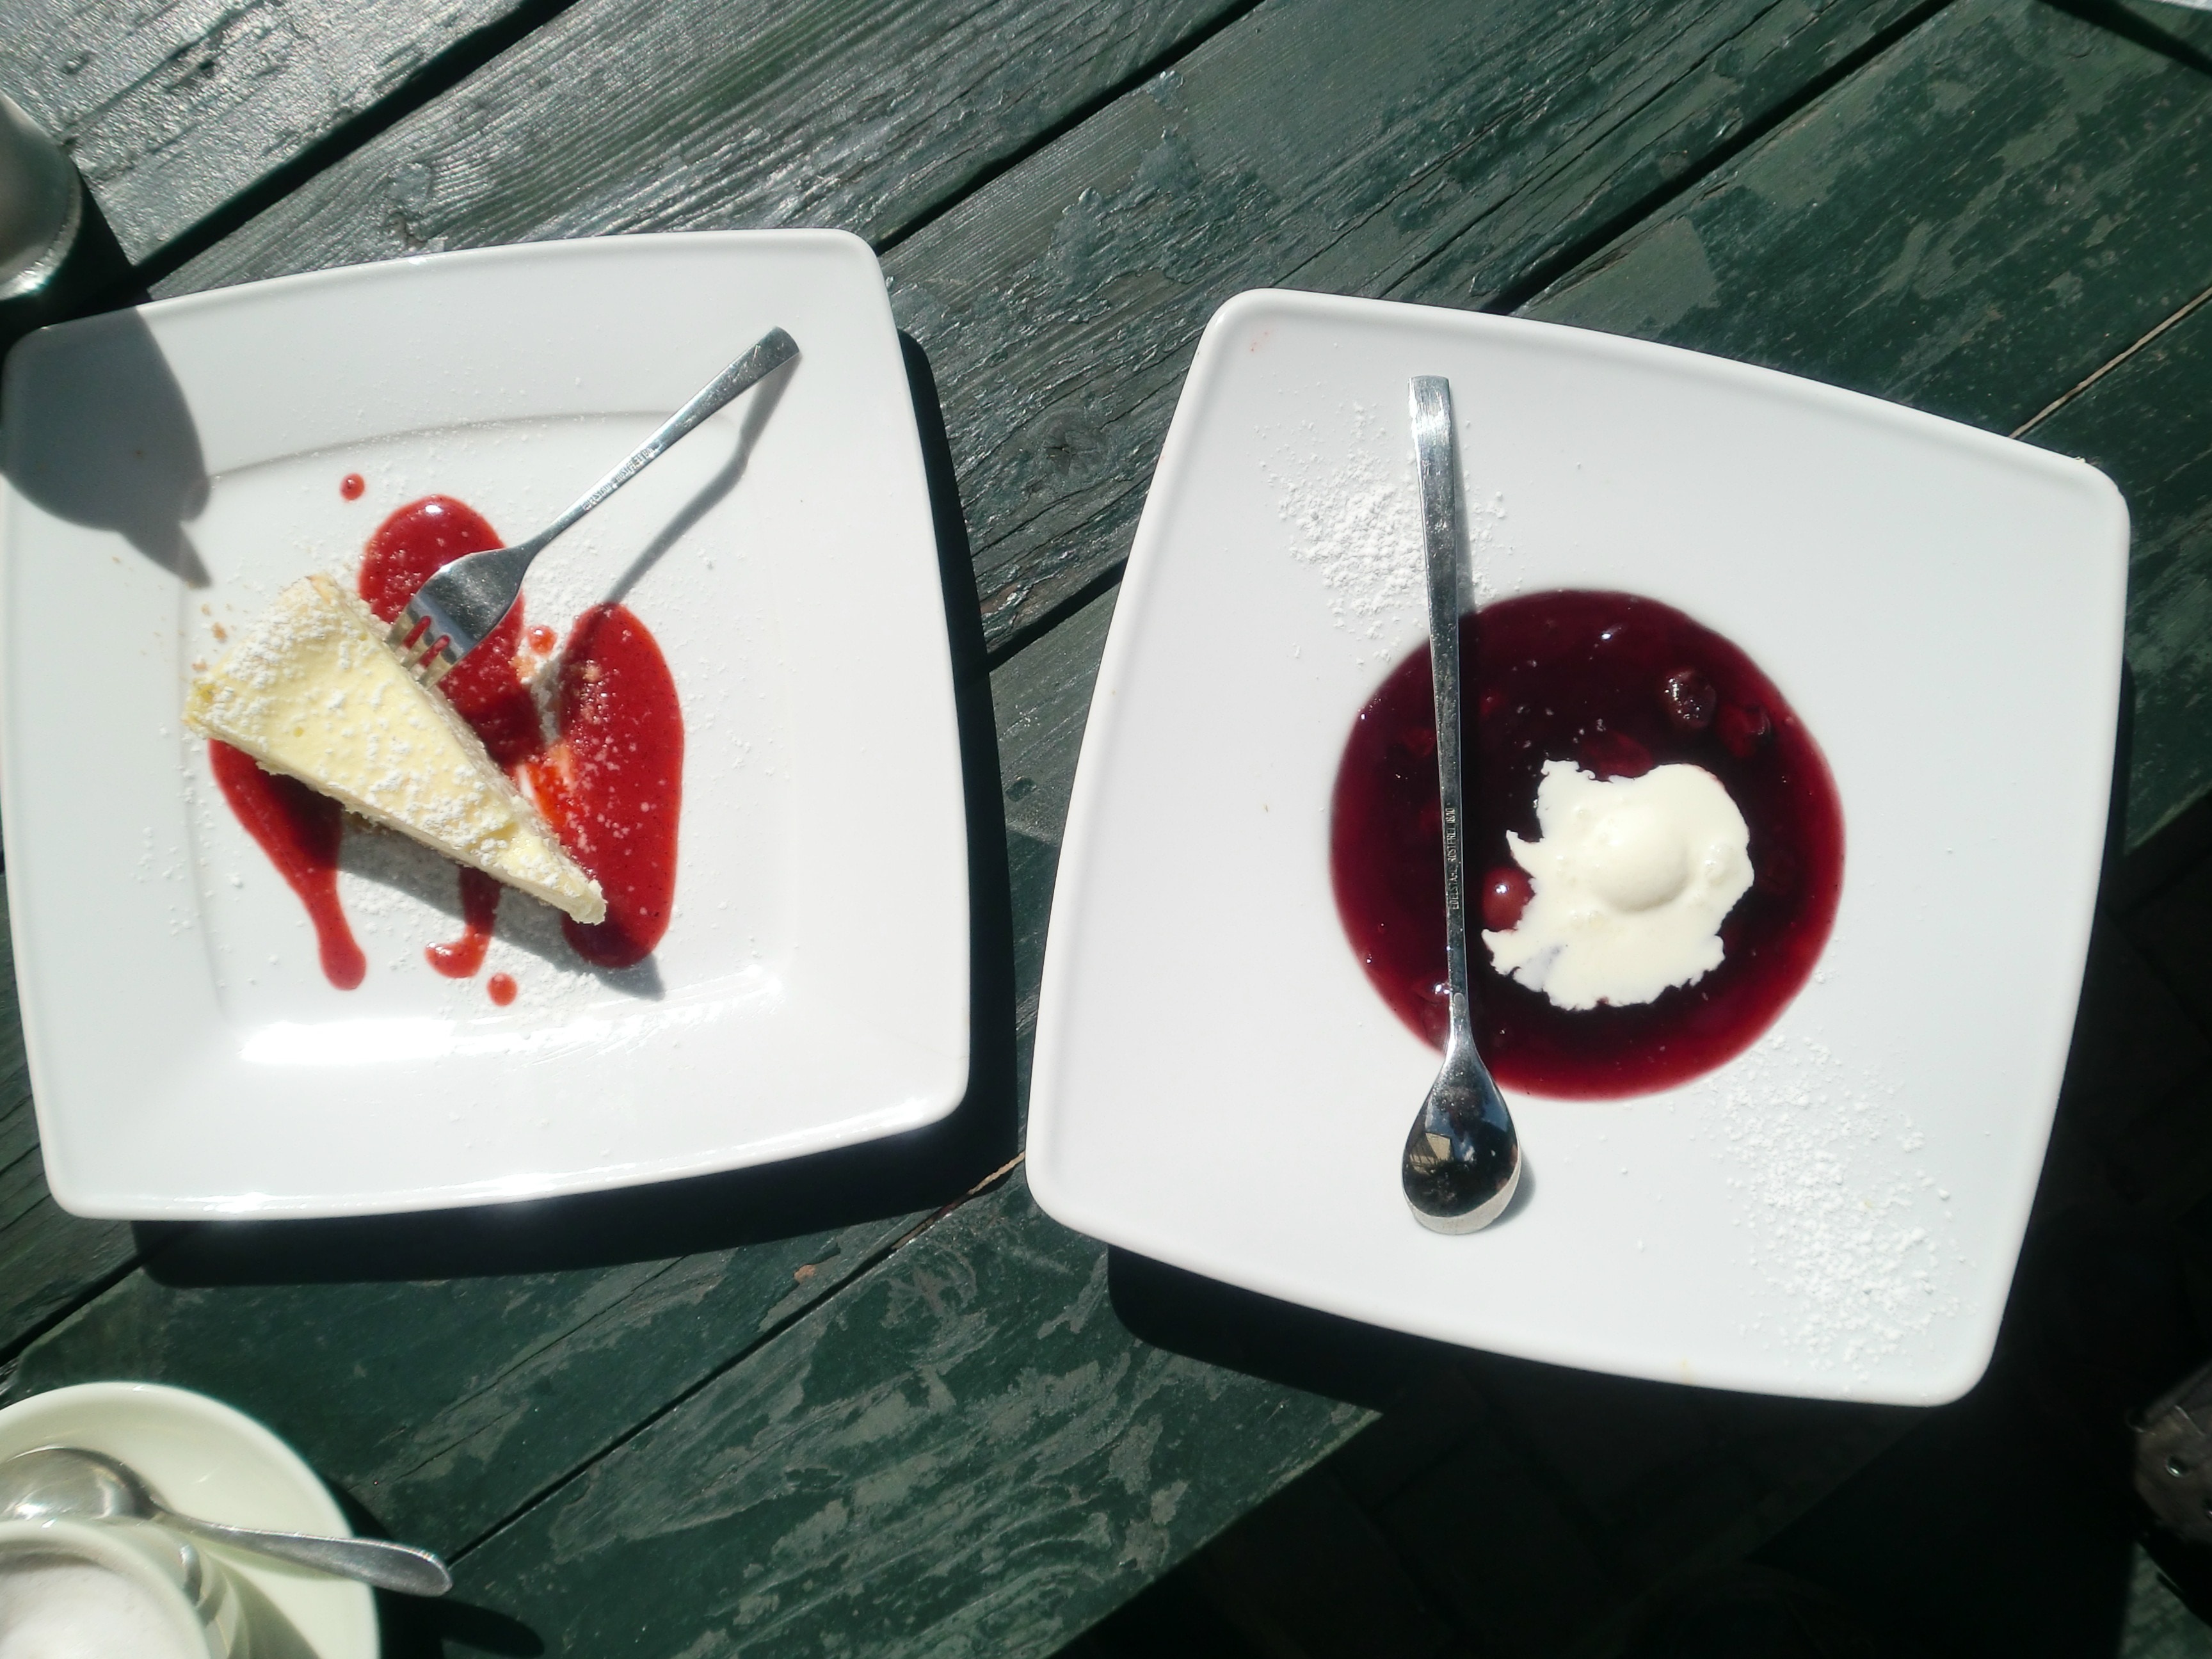 white and red dessert on white ceramic plate